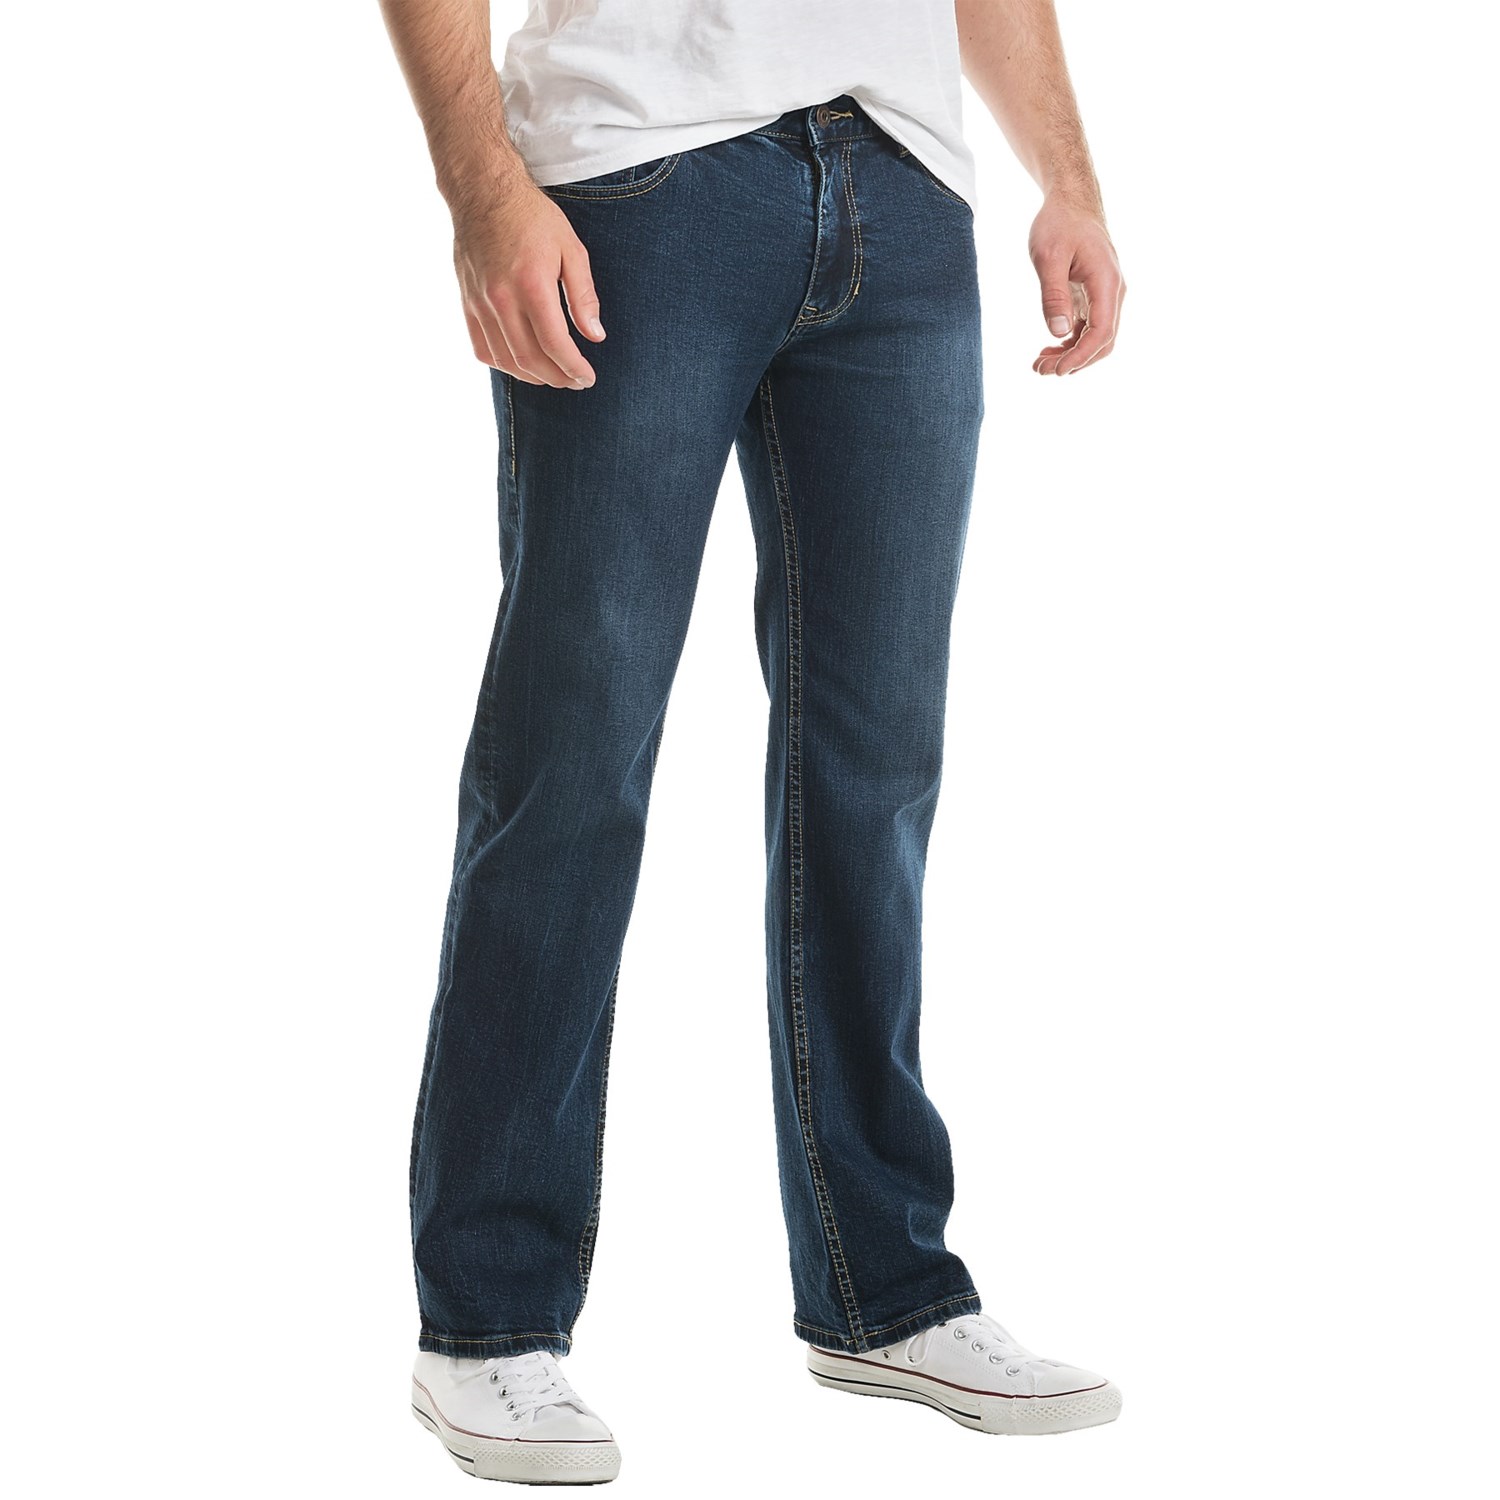 Slate Denim & Co. Coltrane Classic Jeans (For Men) - Save 60%